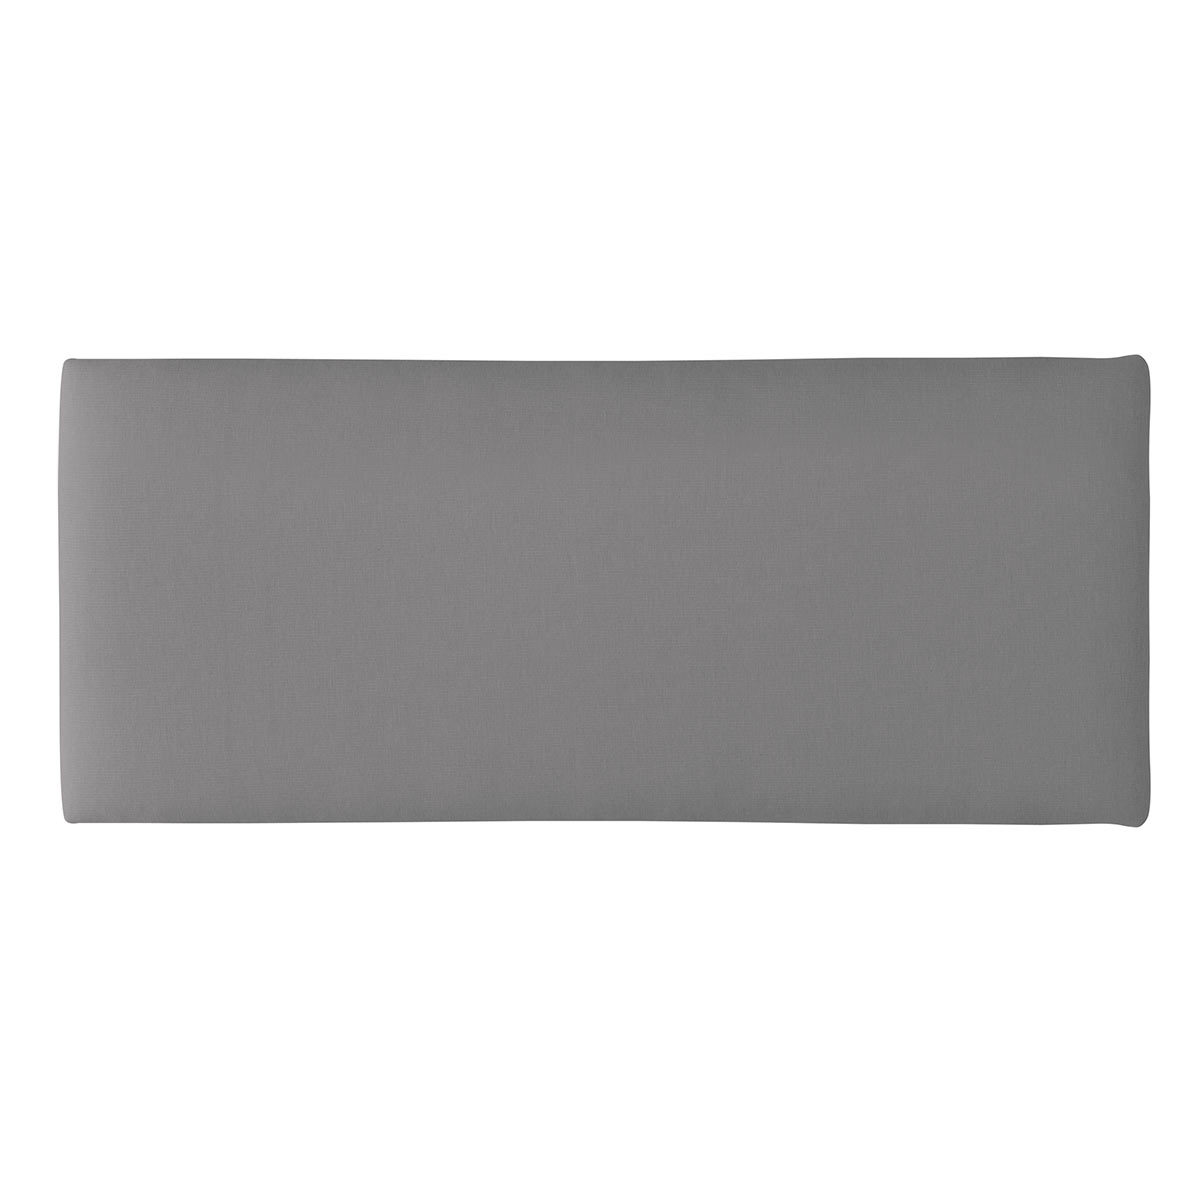 Silentnight Bexley Grey Fabric Headboard, Single